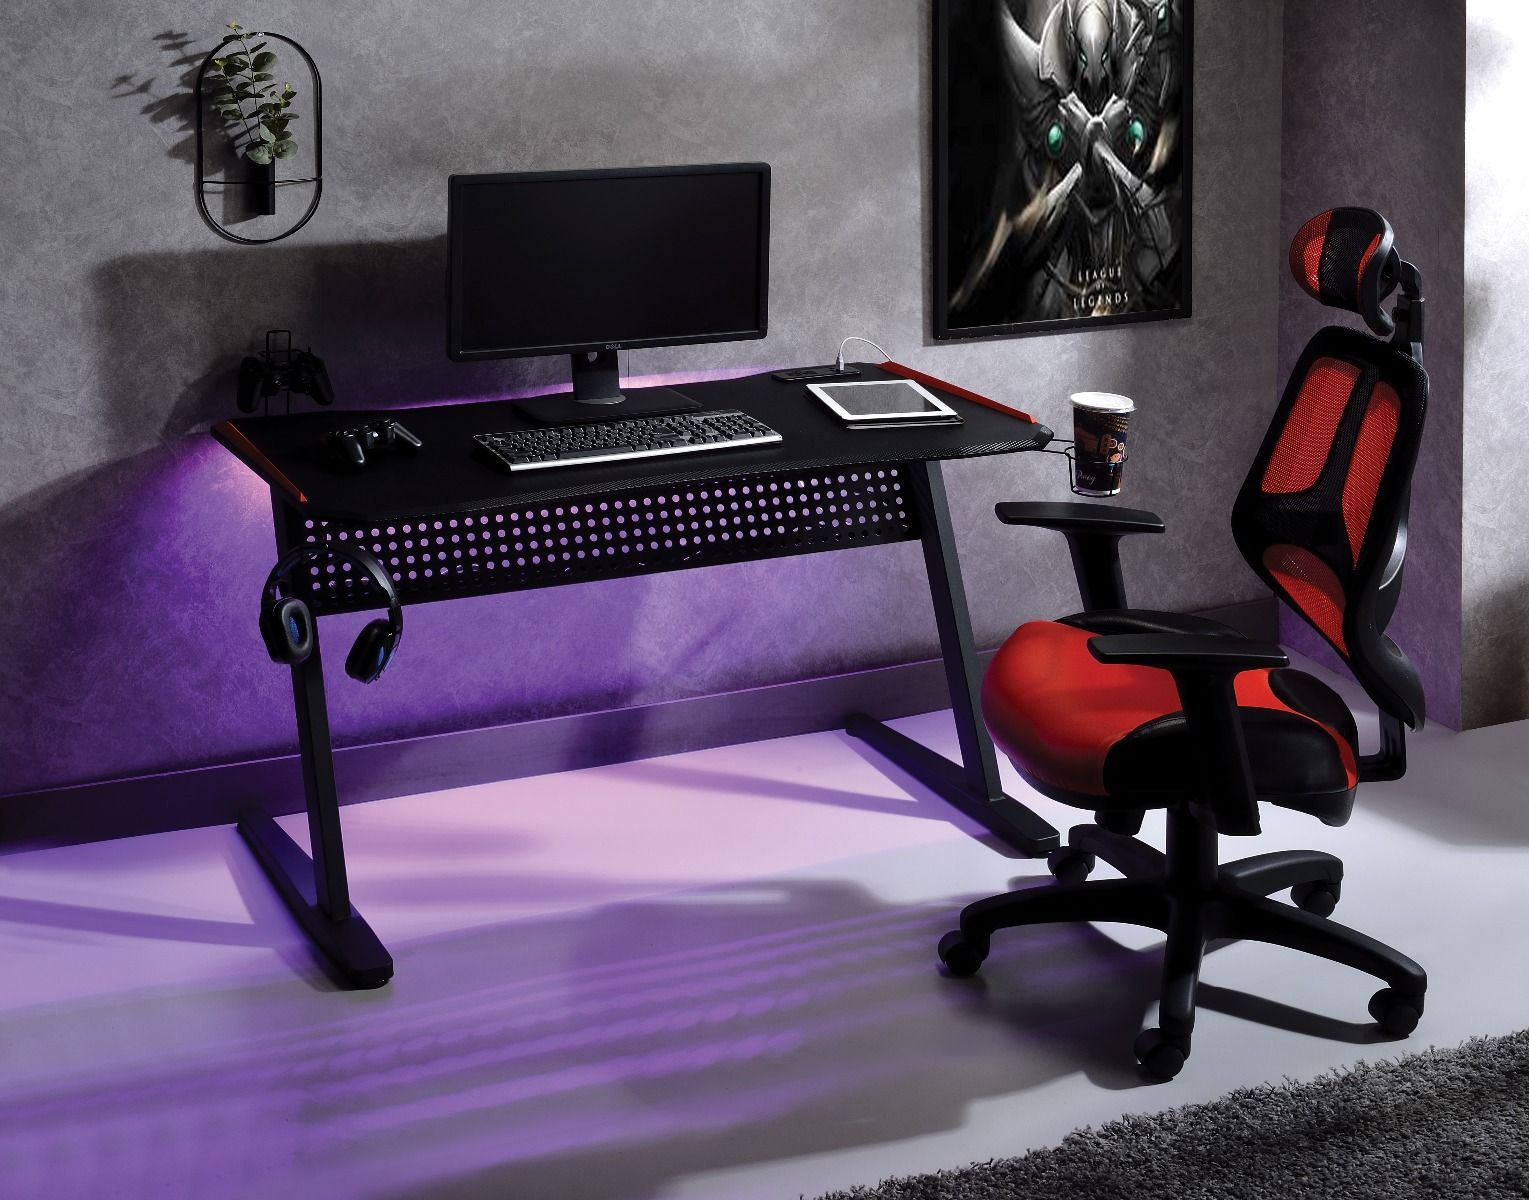 RaDEWAY Gaming Table w/USB Port, Black & Red Finish